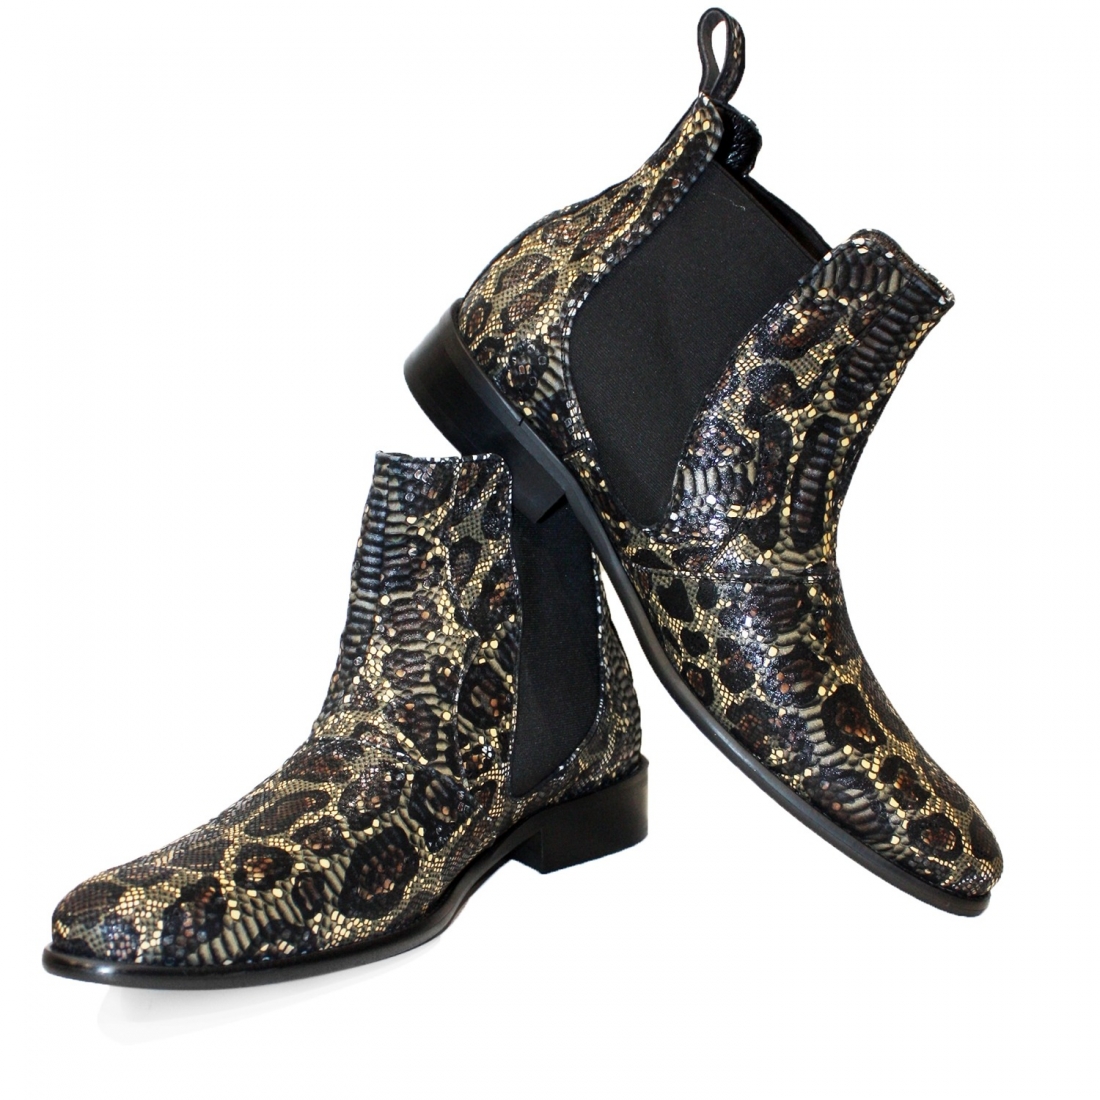 Modello Pumtello - Chelsea Botas - Handmade Colorful Italian Leather Shoes